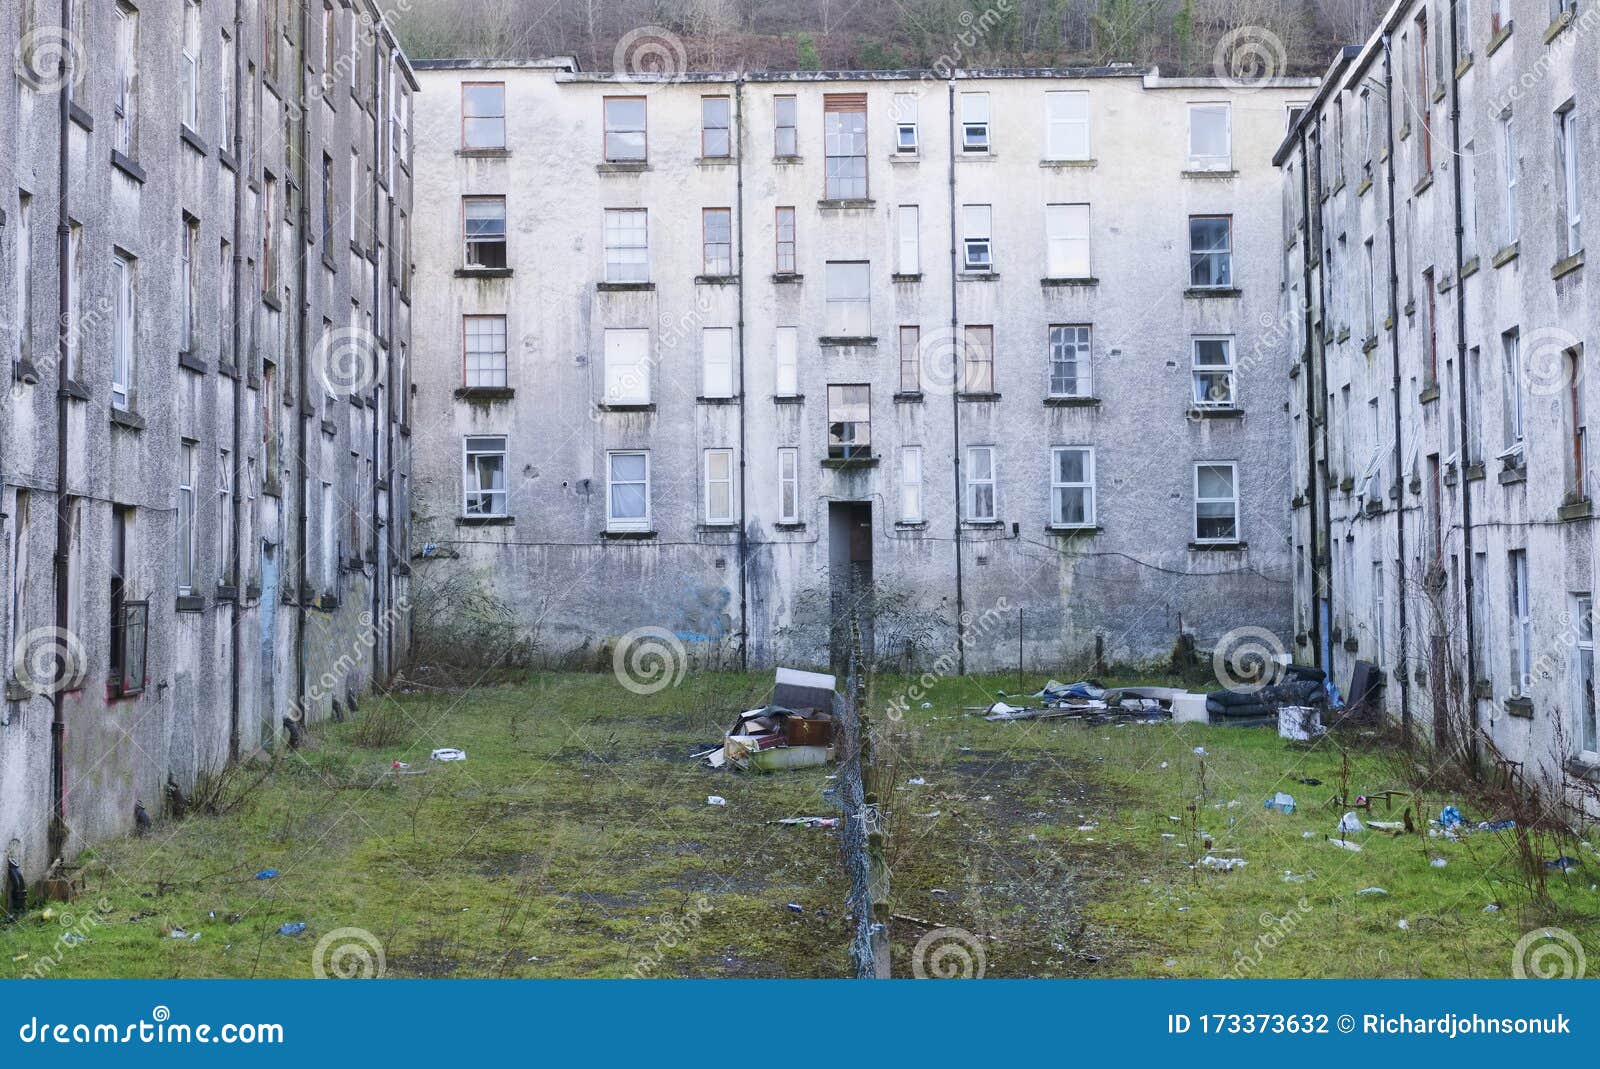 derelict-council-house-poor-housing-estate-slum-many-social-welfare-issues-london-uk-173373632.jpg